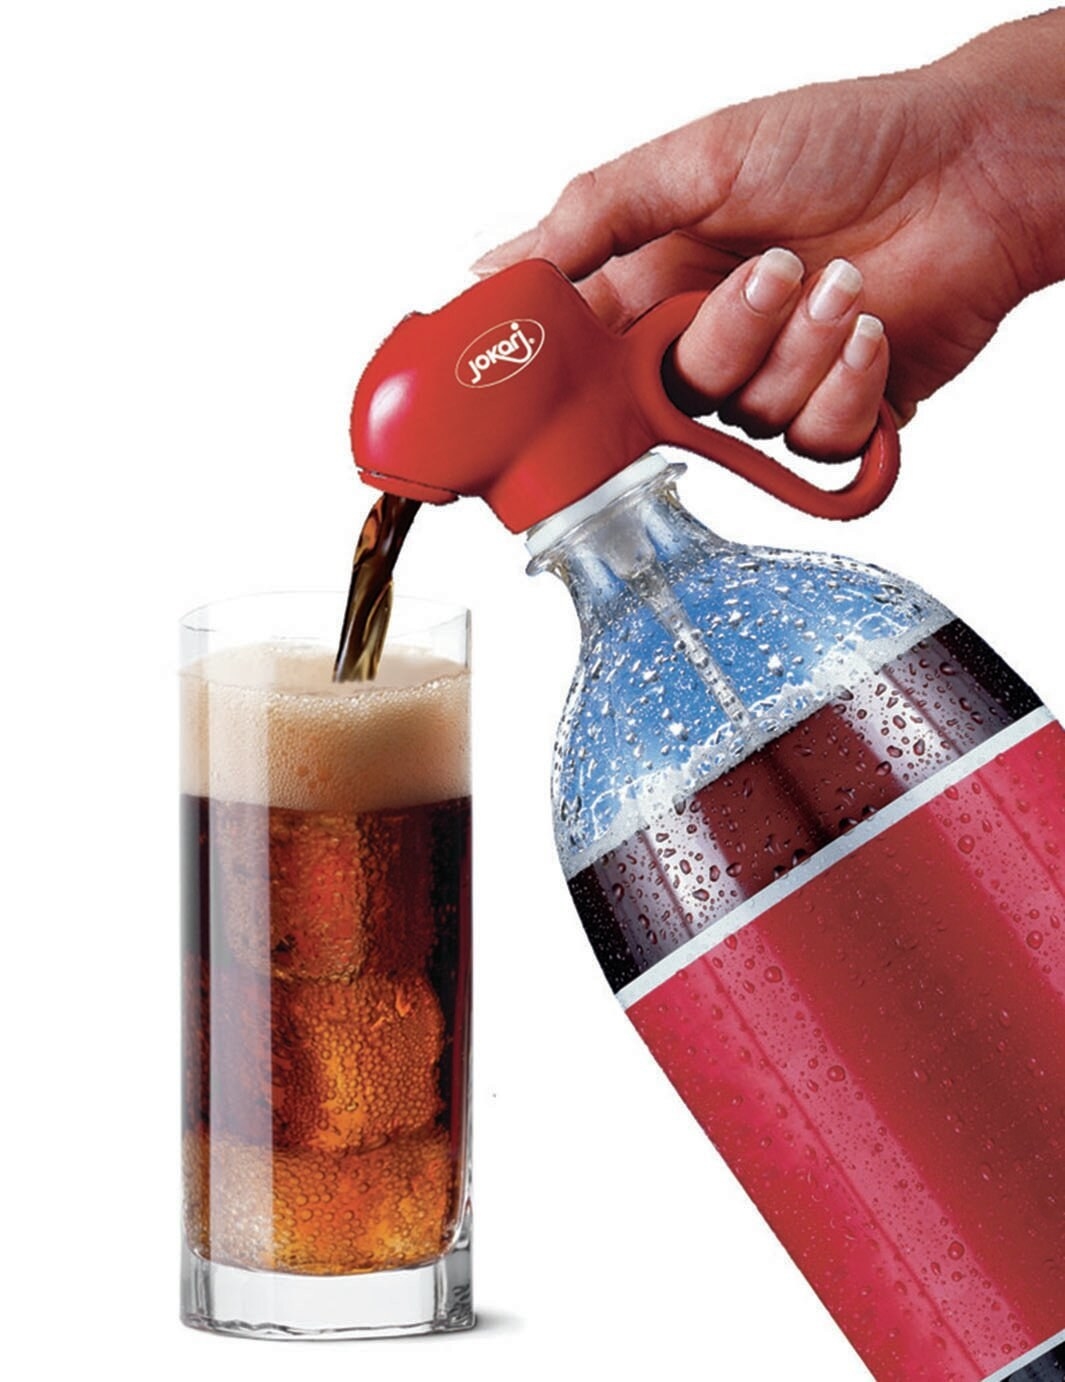 model using soda dispenser to pour soda into glass